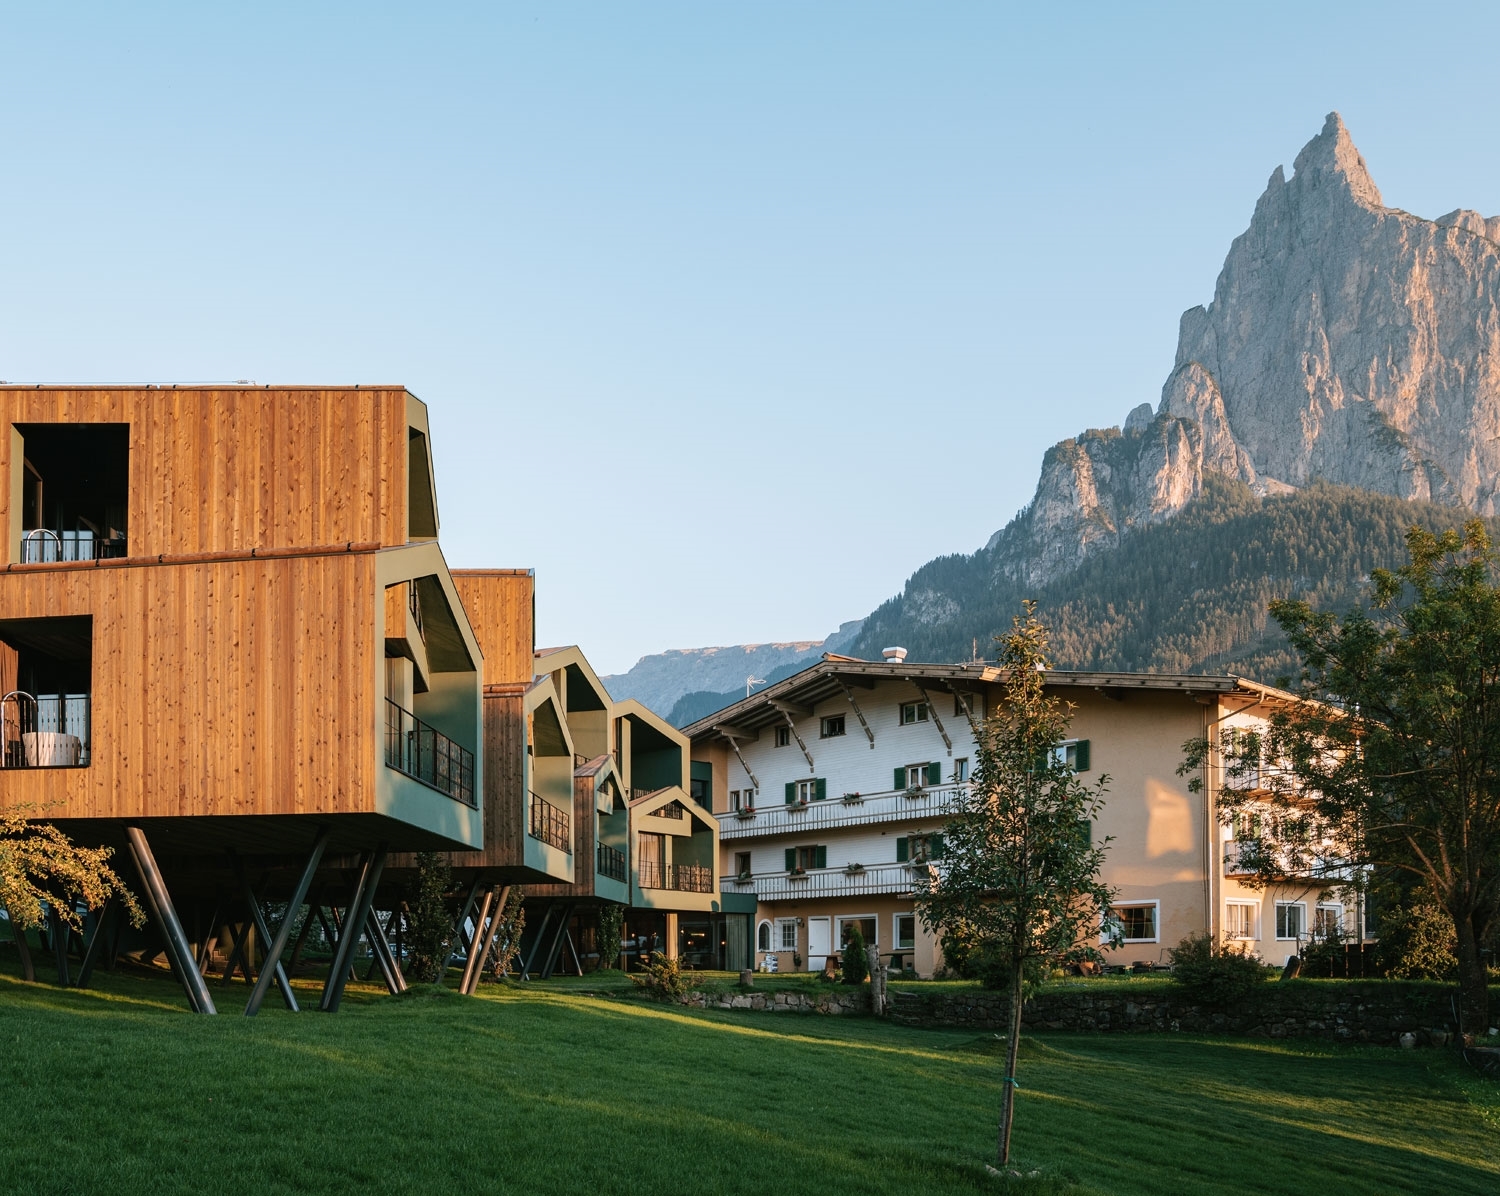 Parc Hotel Florian - Siusi sull’Alpe di Siusi-Sciliar